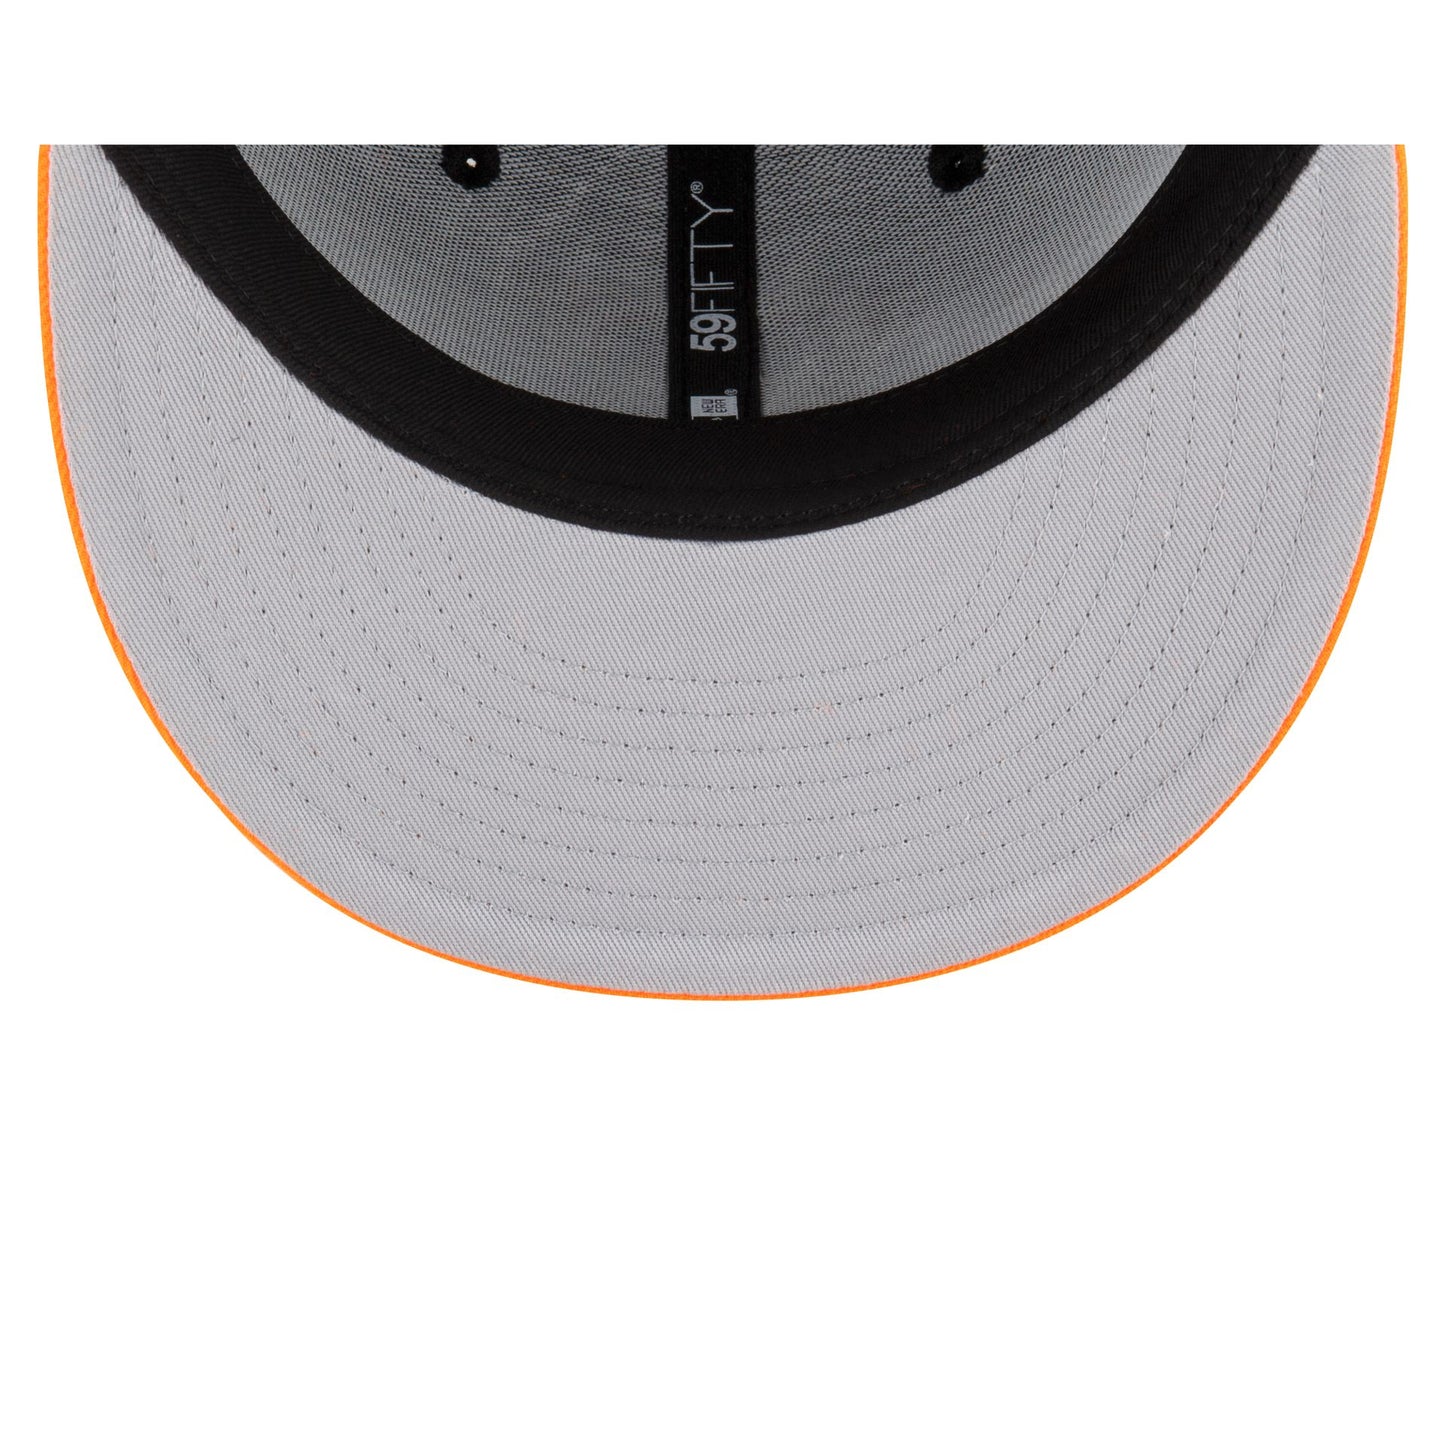 New York Visor New Era Yankees Just Orange – Cap Hat Caps 59FIFTY Fitted